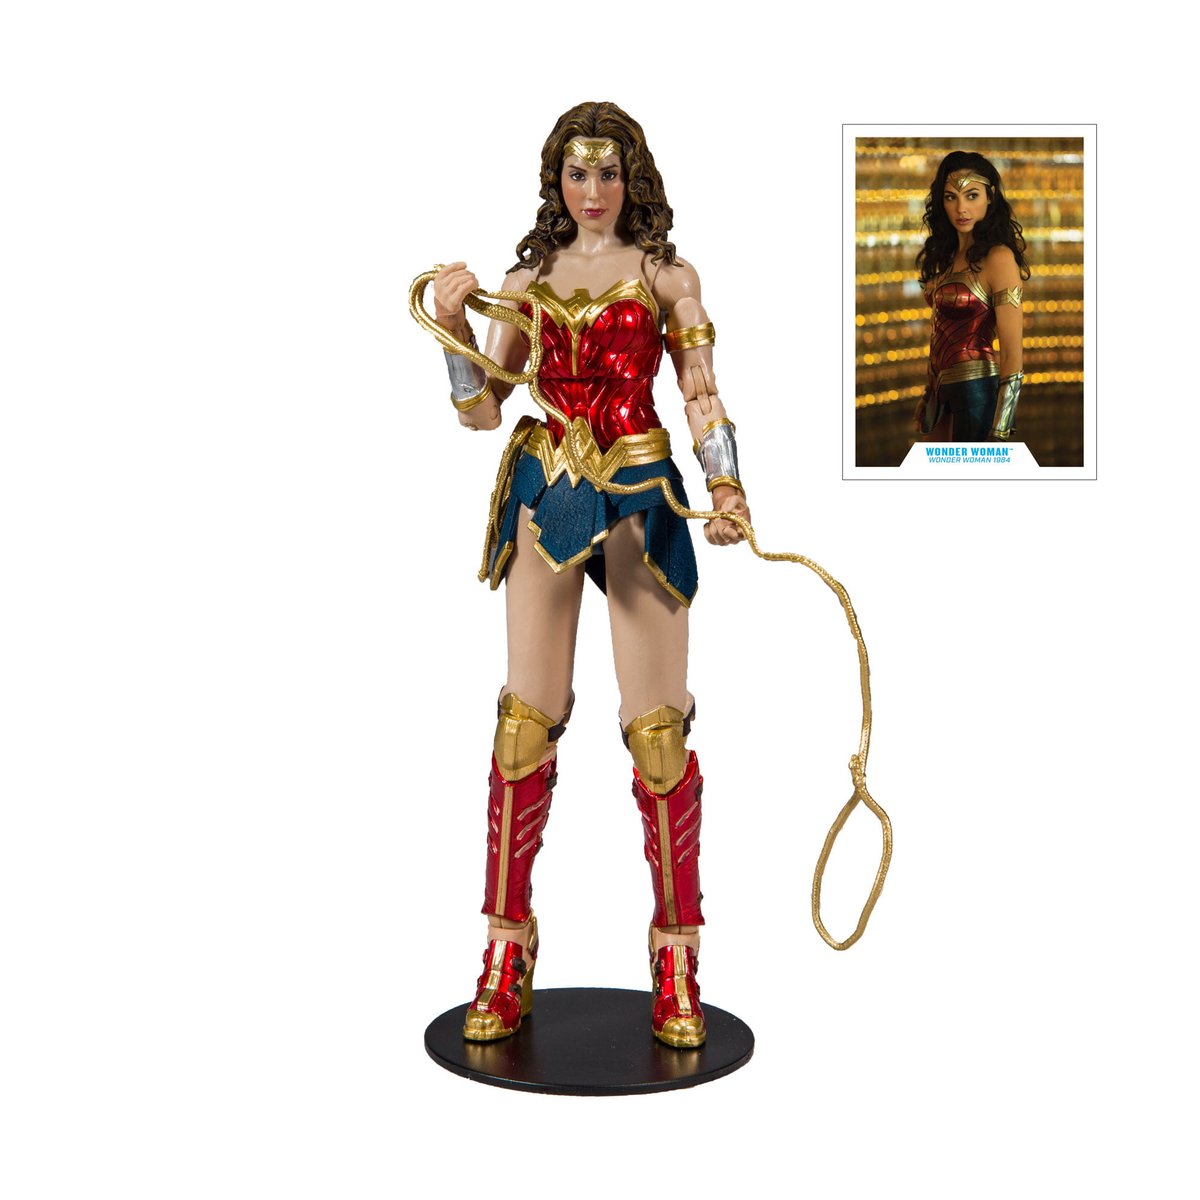 38% Off!

McFarlane DC Multiverse Wonder Woman 1984

https://t.co/cMQY3vNSQi

#BwcDeals #clearthelist #amazonfba #amazonfbm #Arbitrage #Deals https://t.co/0NwXL6Qci4